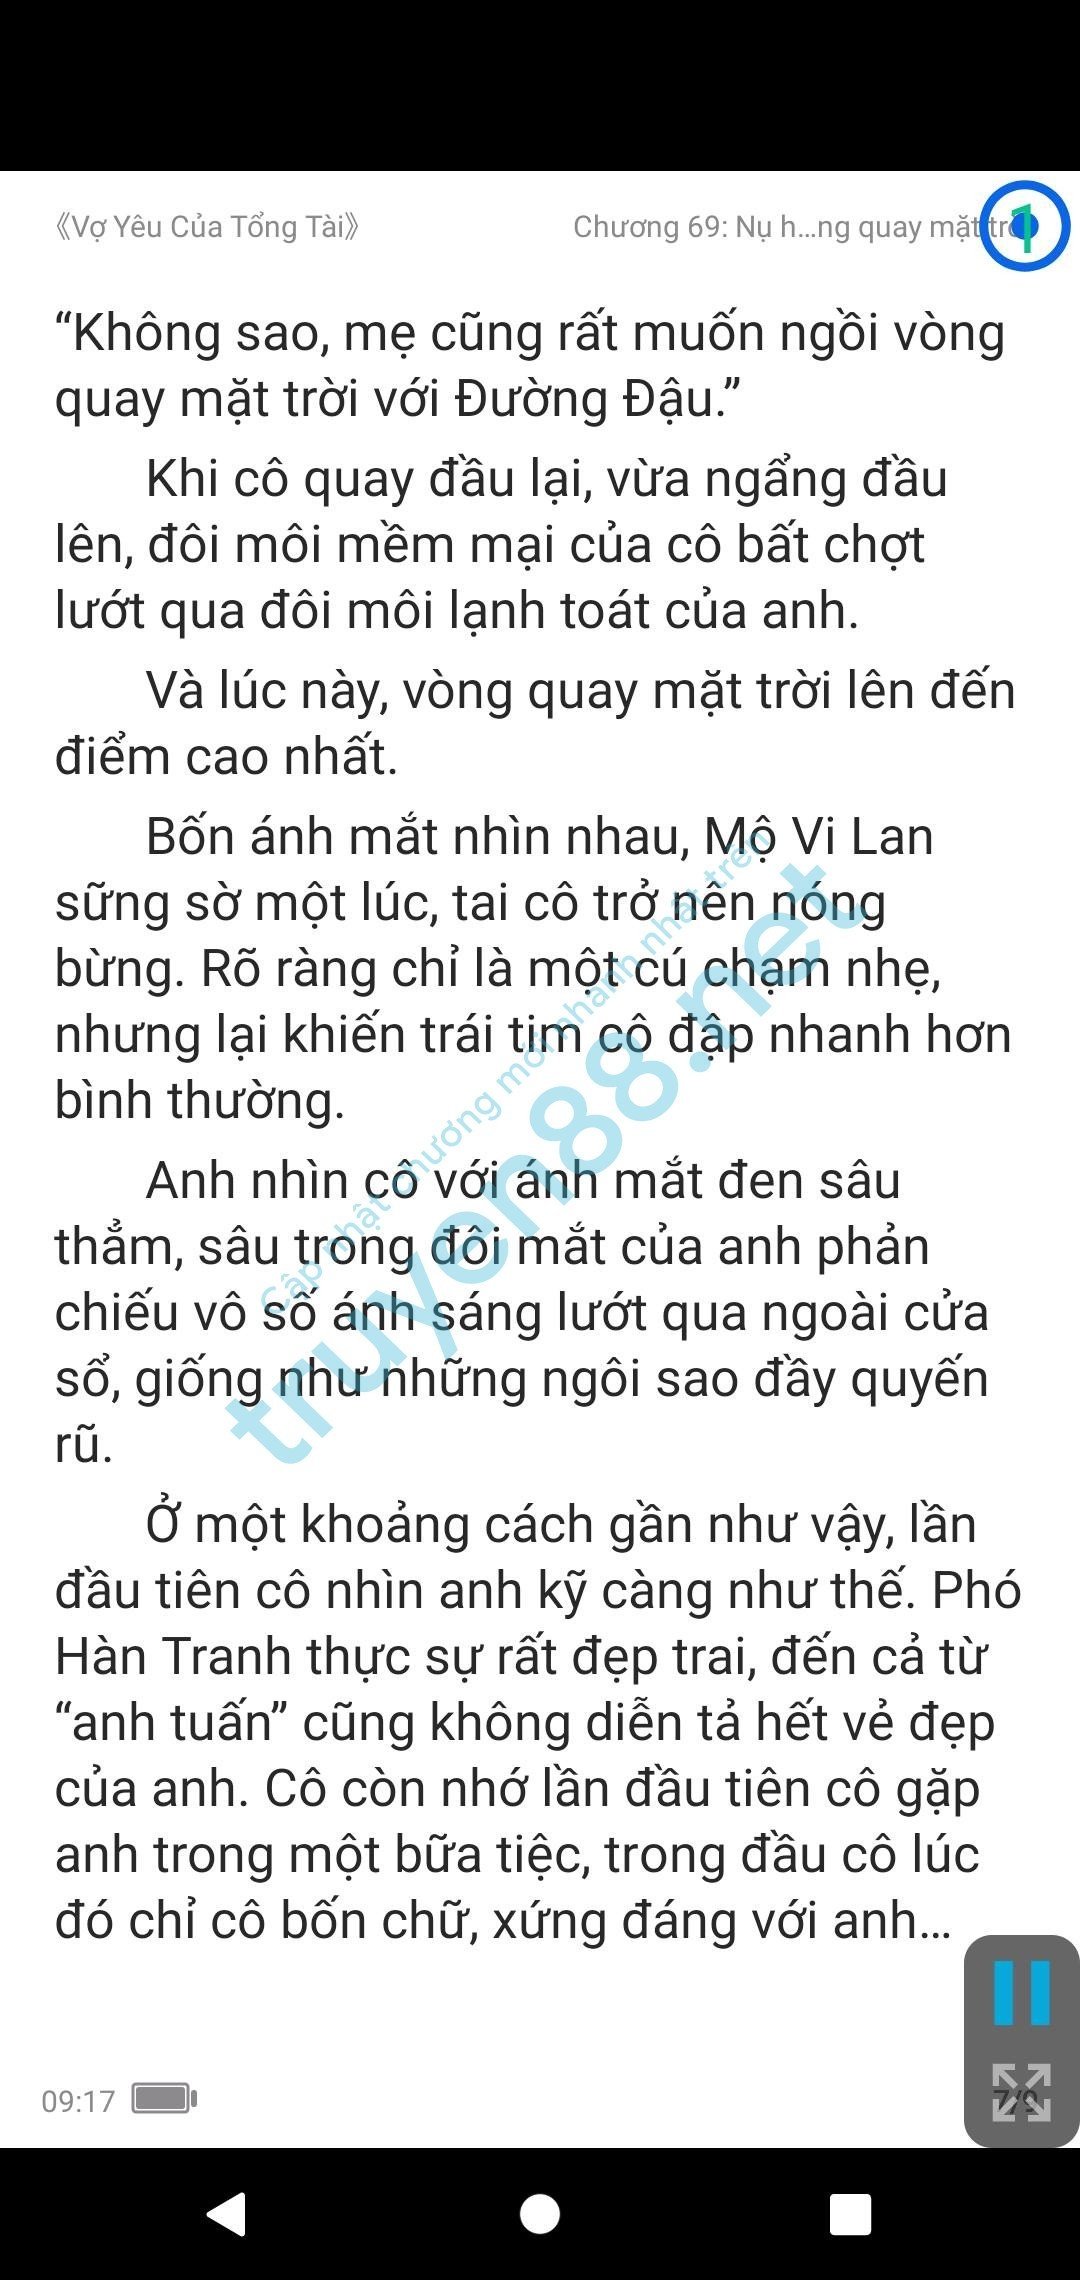 vo-yeu-cua-tong-tai-mo-vi-lan--pho-han-tranh-69-0